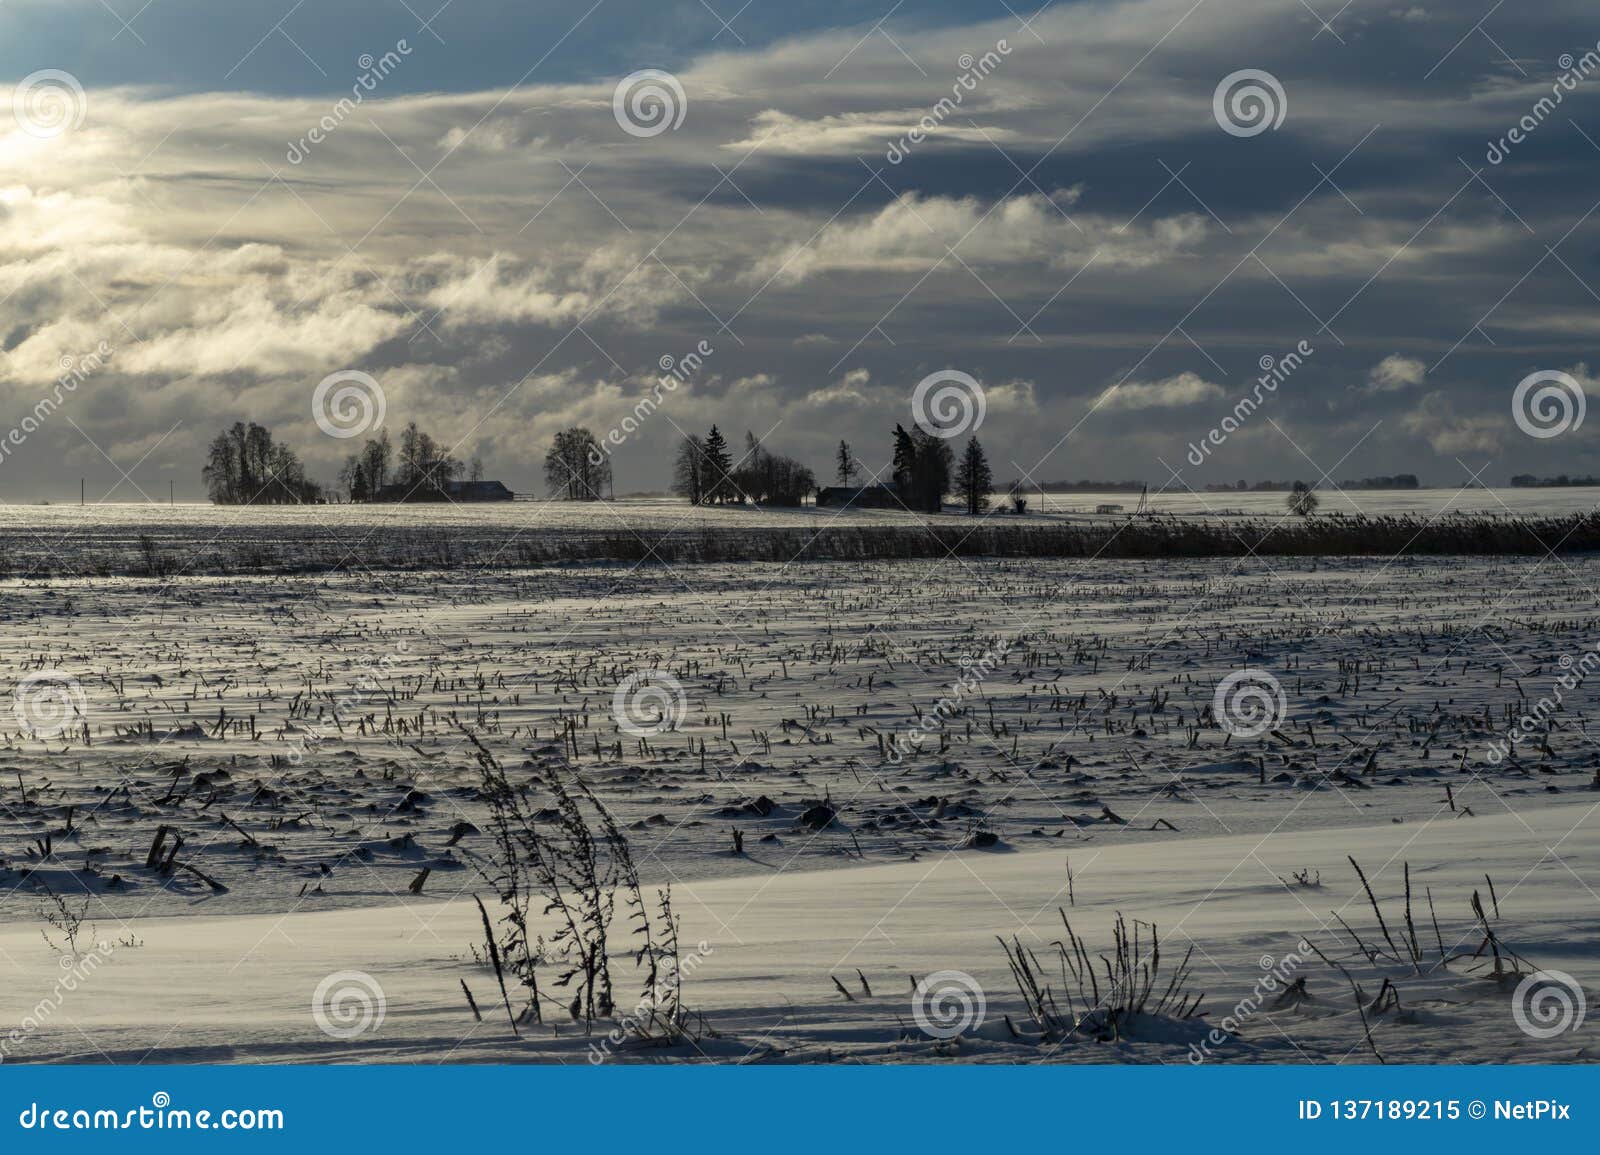 cold bleak snowy winter landscape